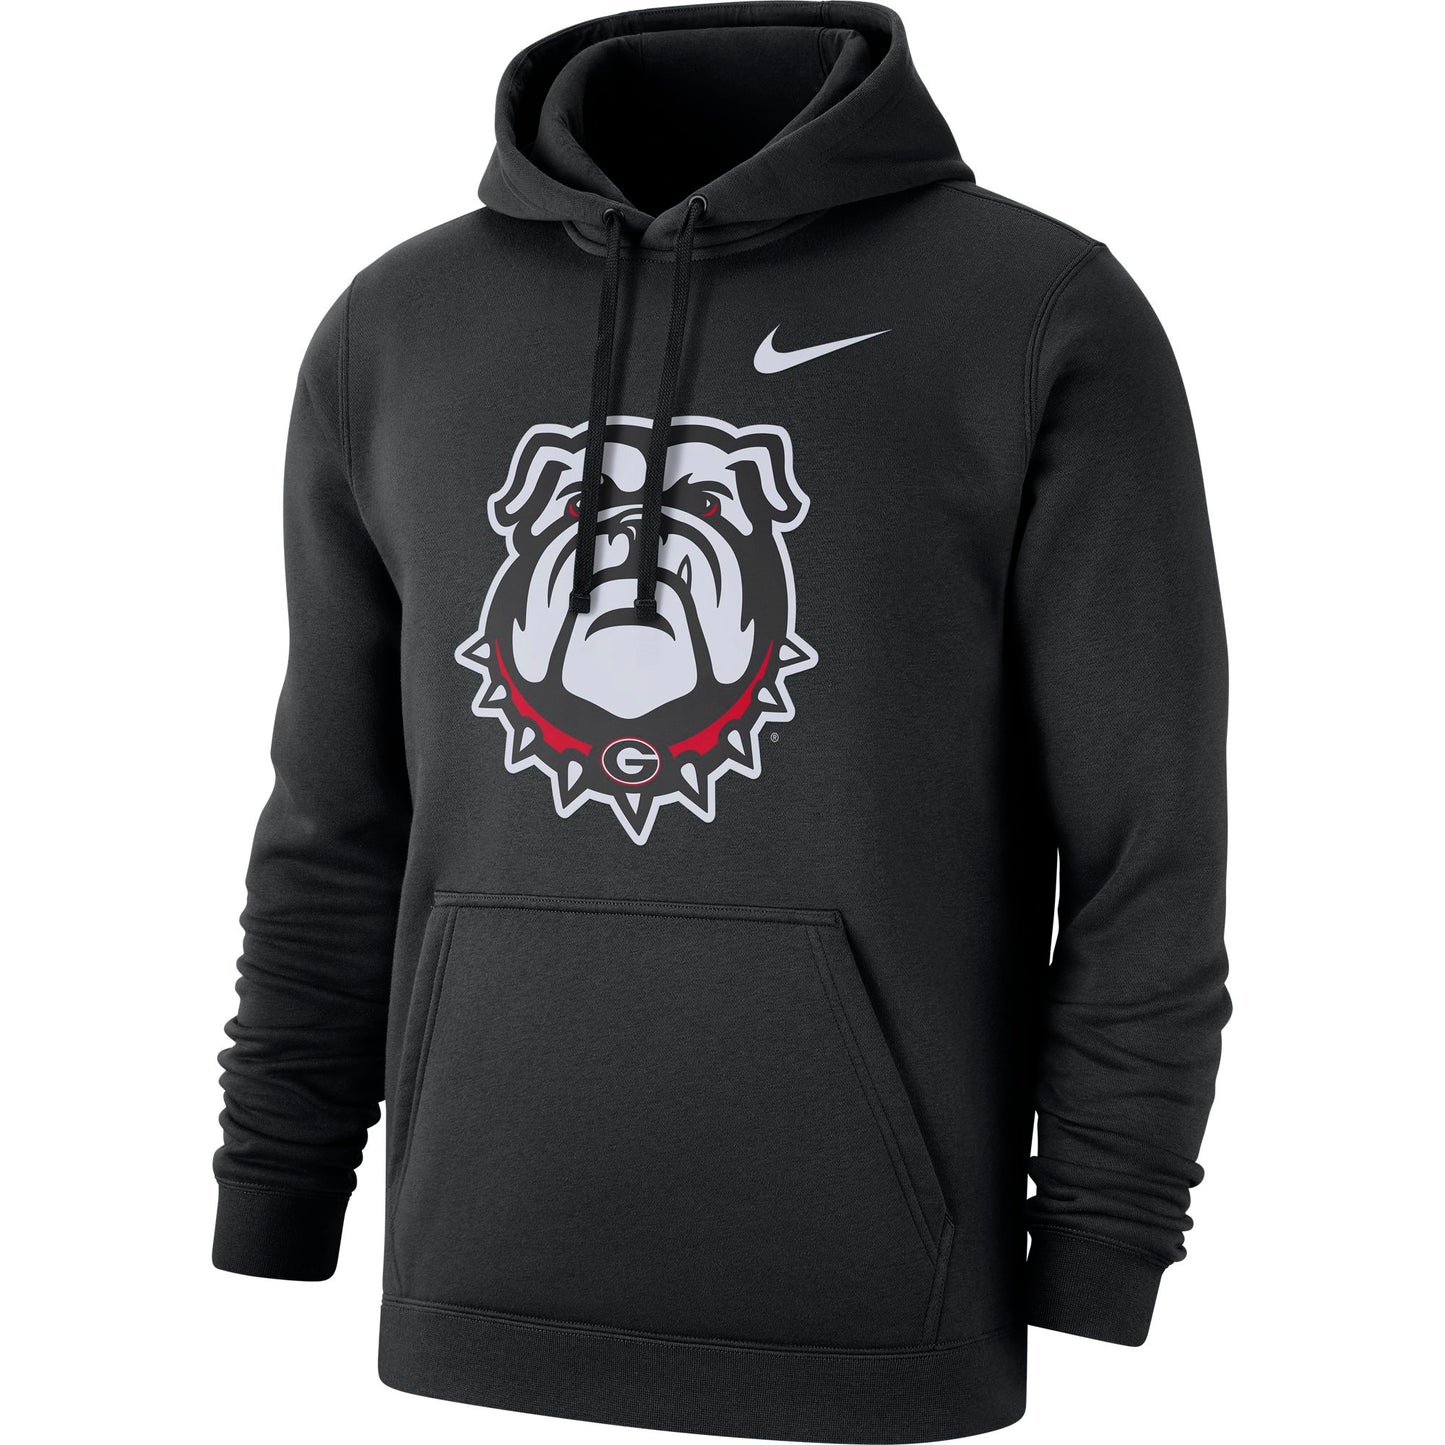 Nike Men's Georgia Bulldogs Black "Bulldog" Club Fleece Hoodie